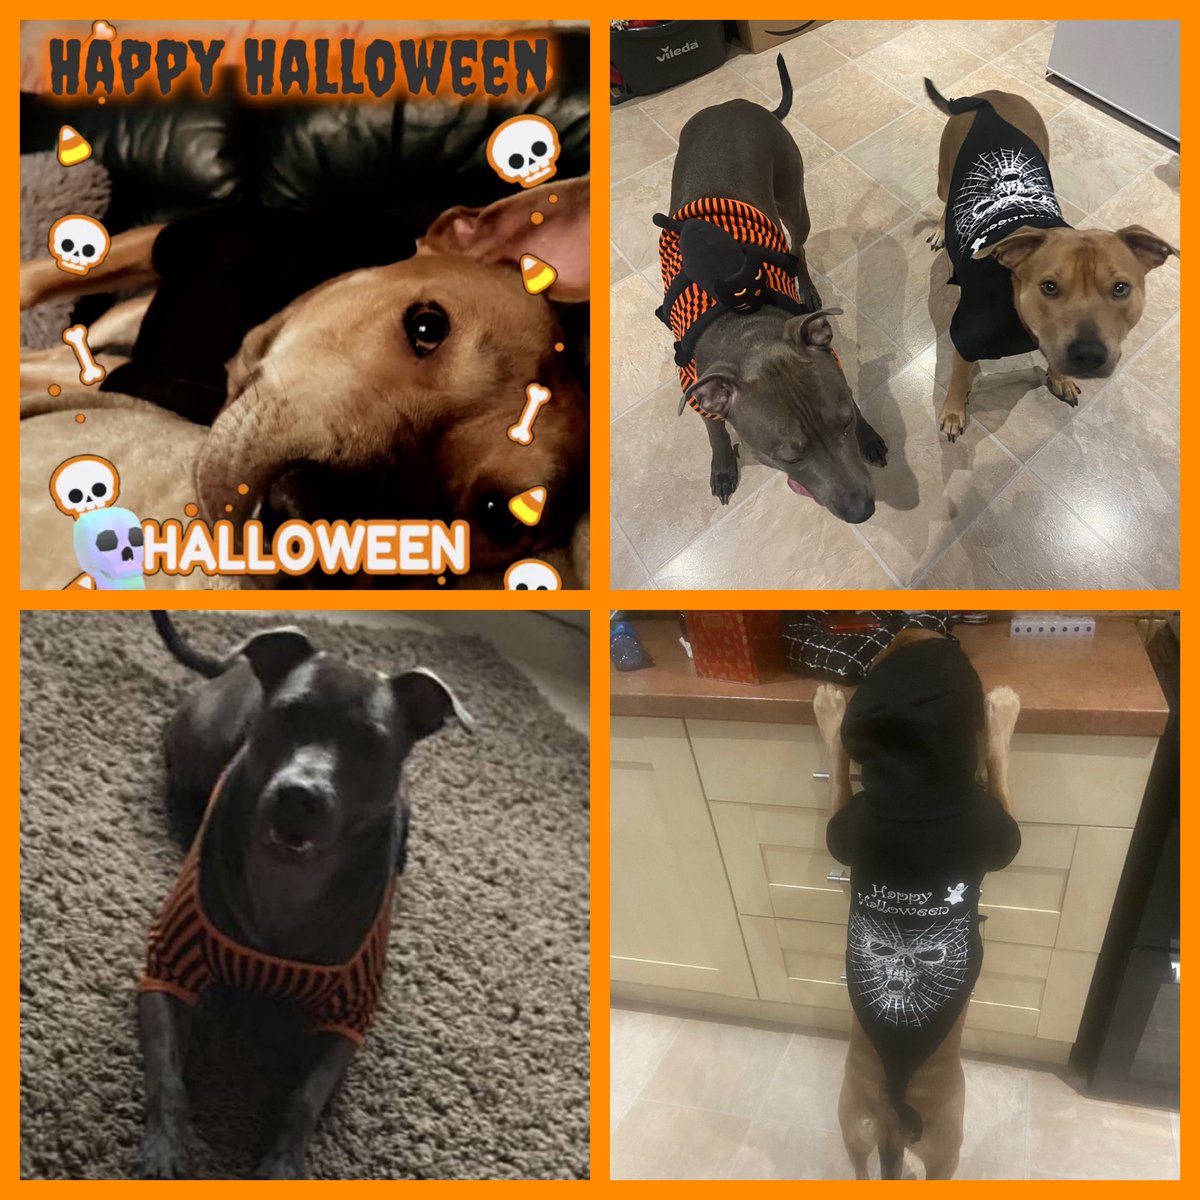 Happy Halloween! Do u like our outfits? 🐶🐾💕🐶🐾💕🎃👻🎃👻#halloween2021 #Halloween #Halloweendogs #dogsoftwitter #dogs #staffy #staffydogs #staffymoments #staffypup #staffypuppies #staffydog #staffydogs #staffysofig #staffyfamily #dogsofessex #dogcrew #dogsuk #essexdogs #essex